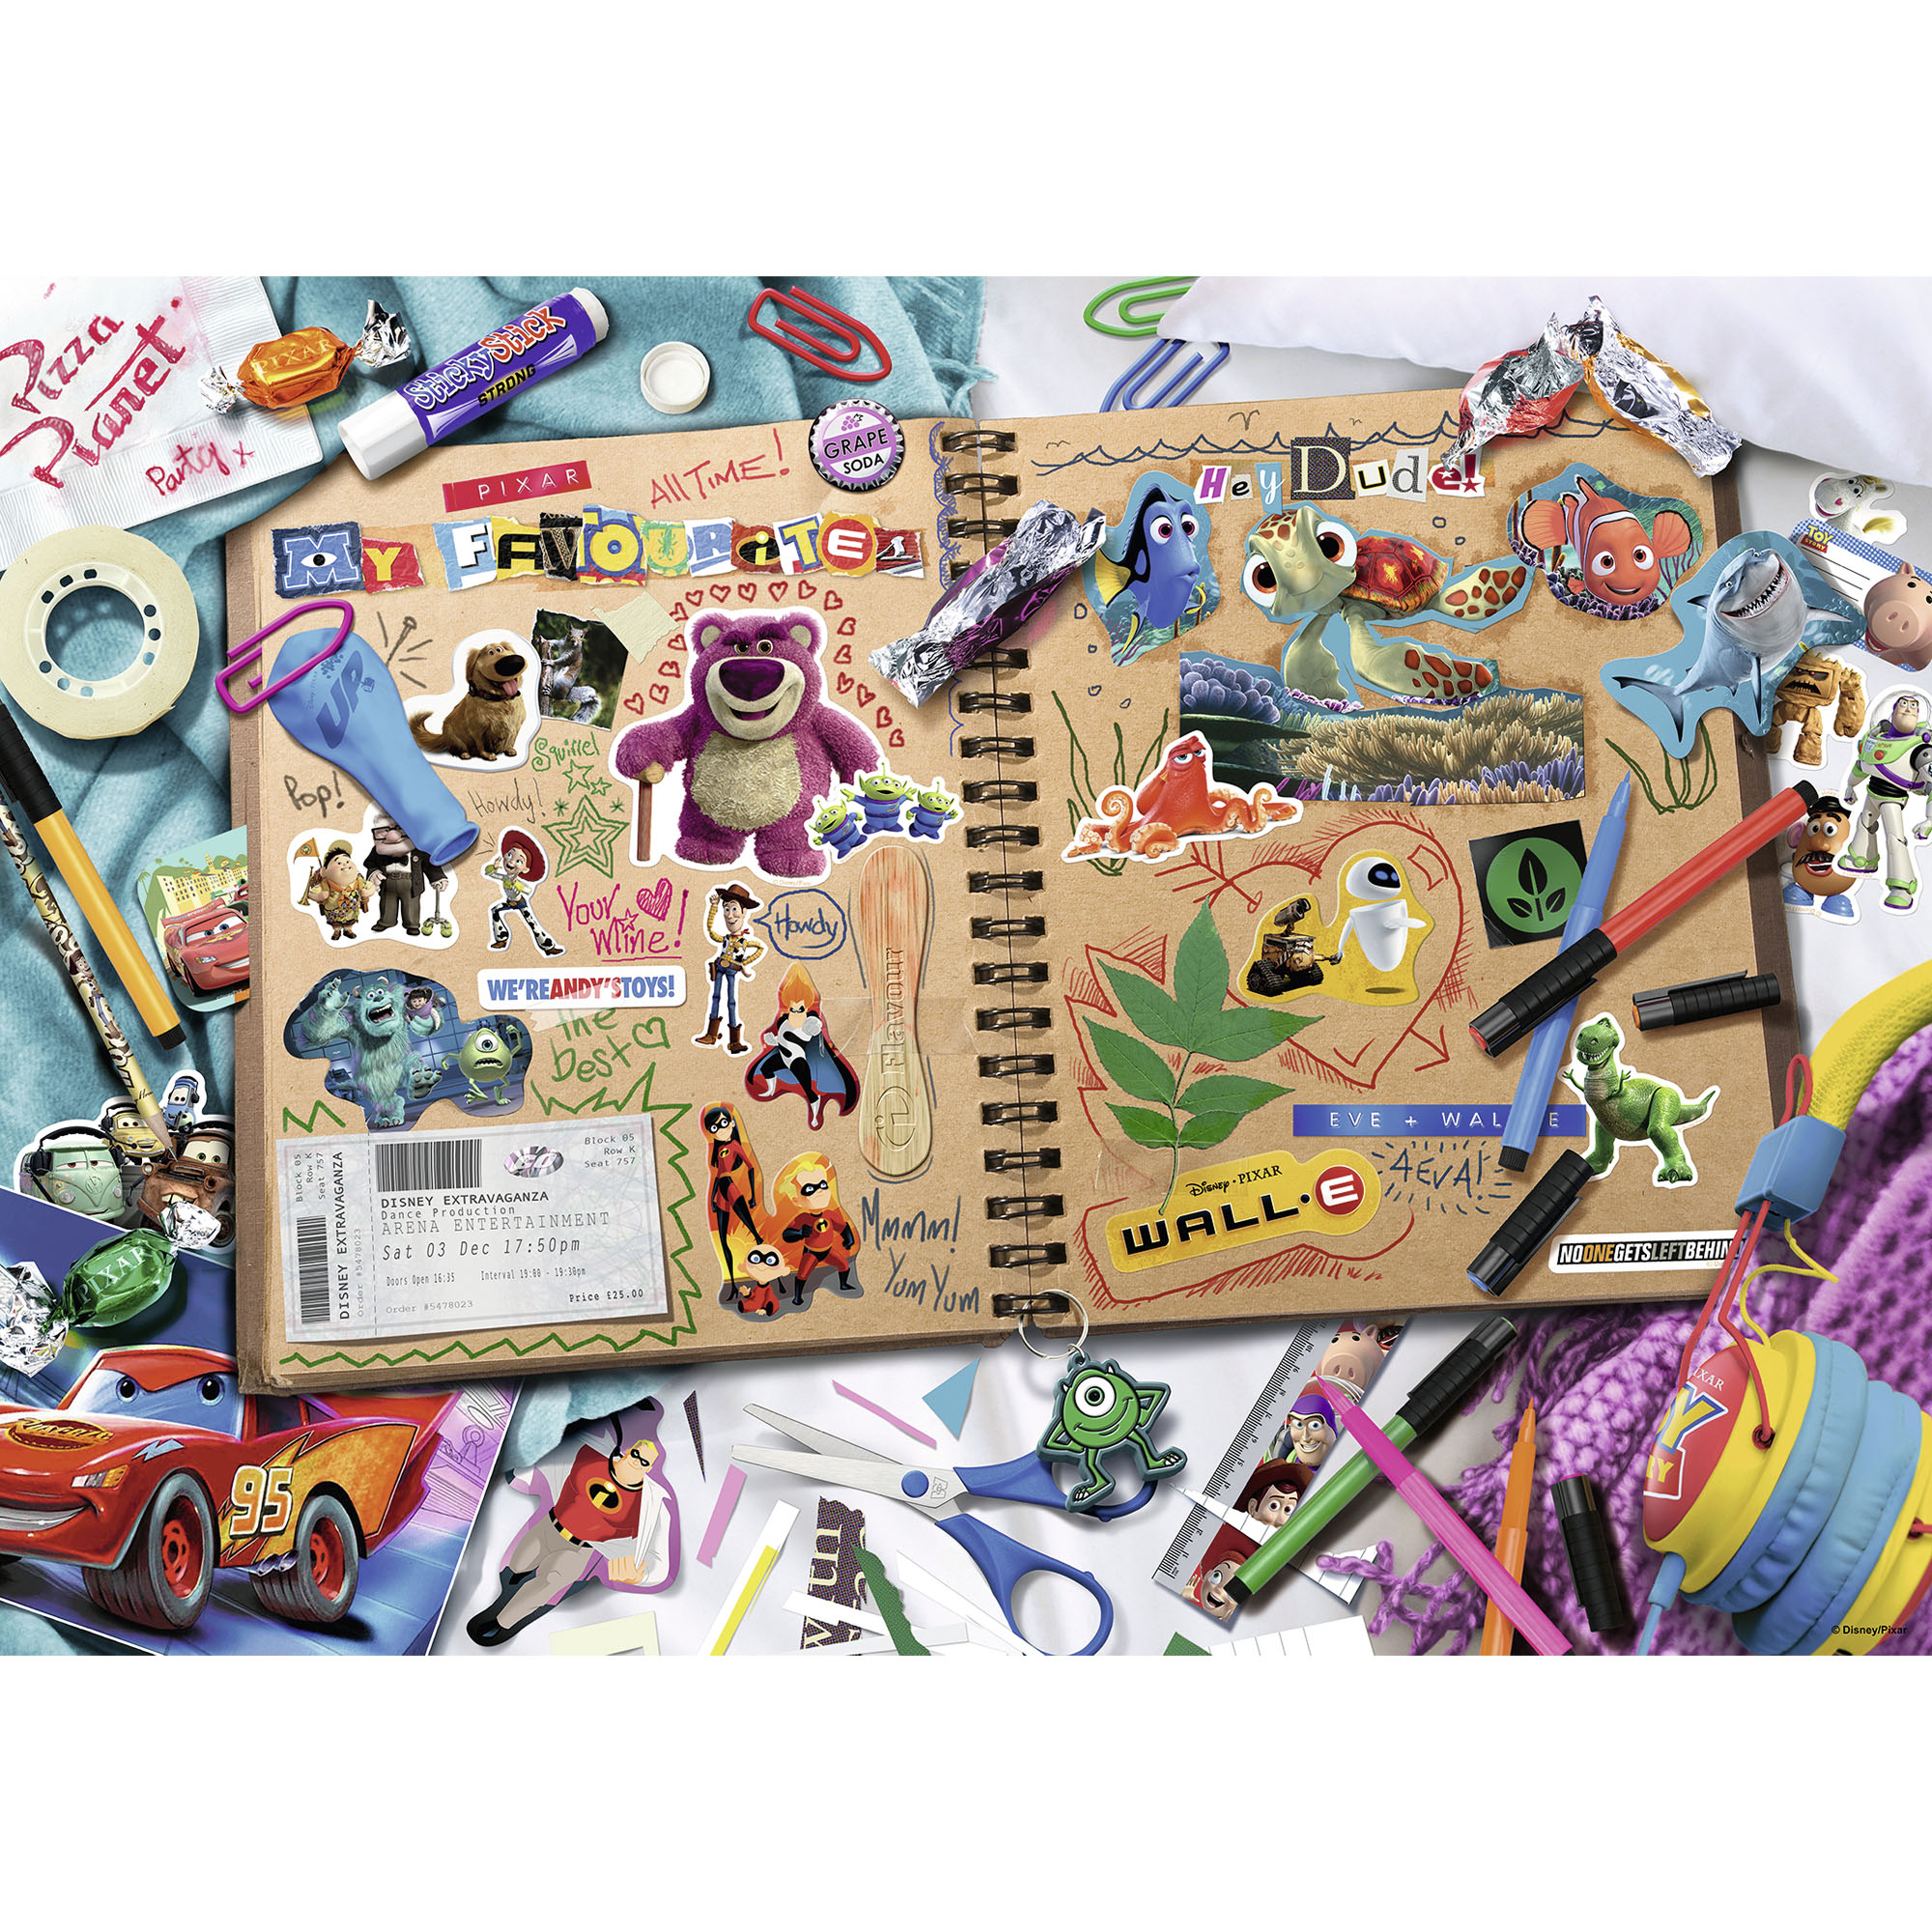 Ravensburger Puzzle 1000 pezzi 19816 - Disney Pixar Scrapbook, , large